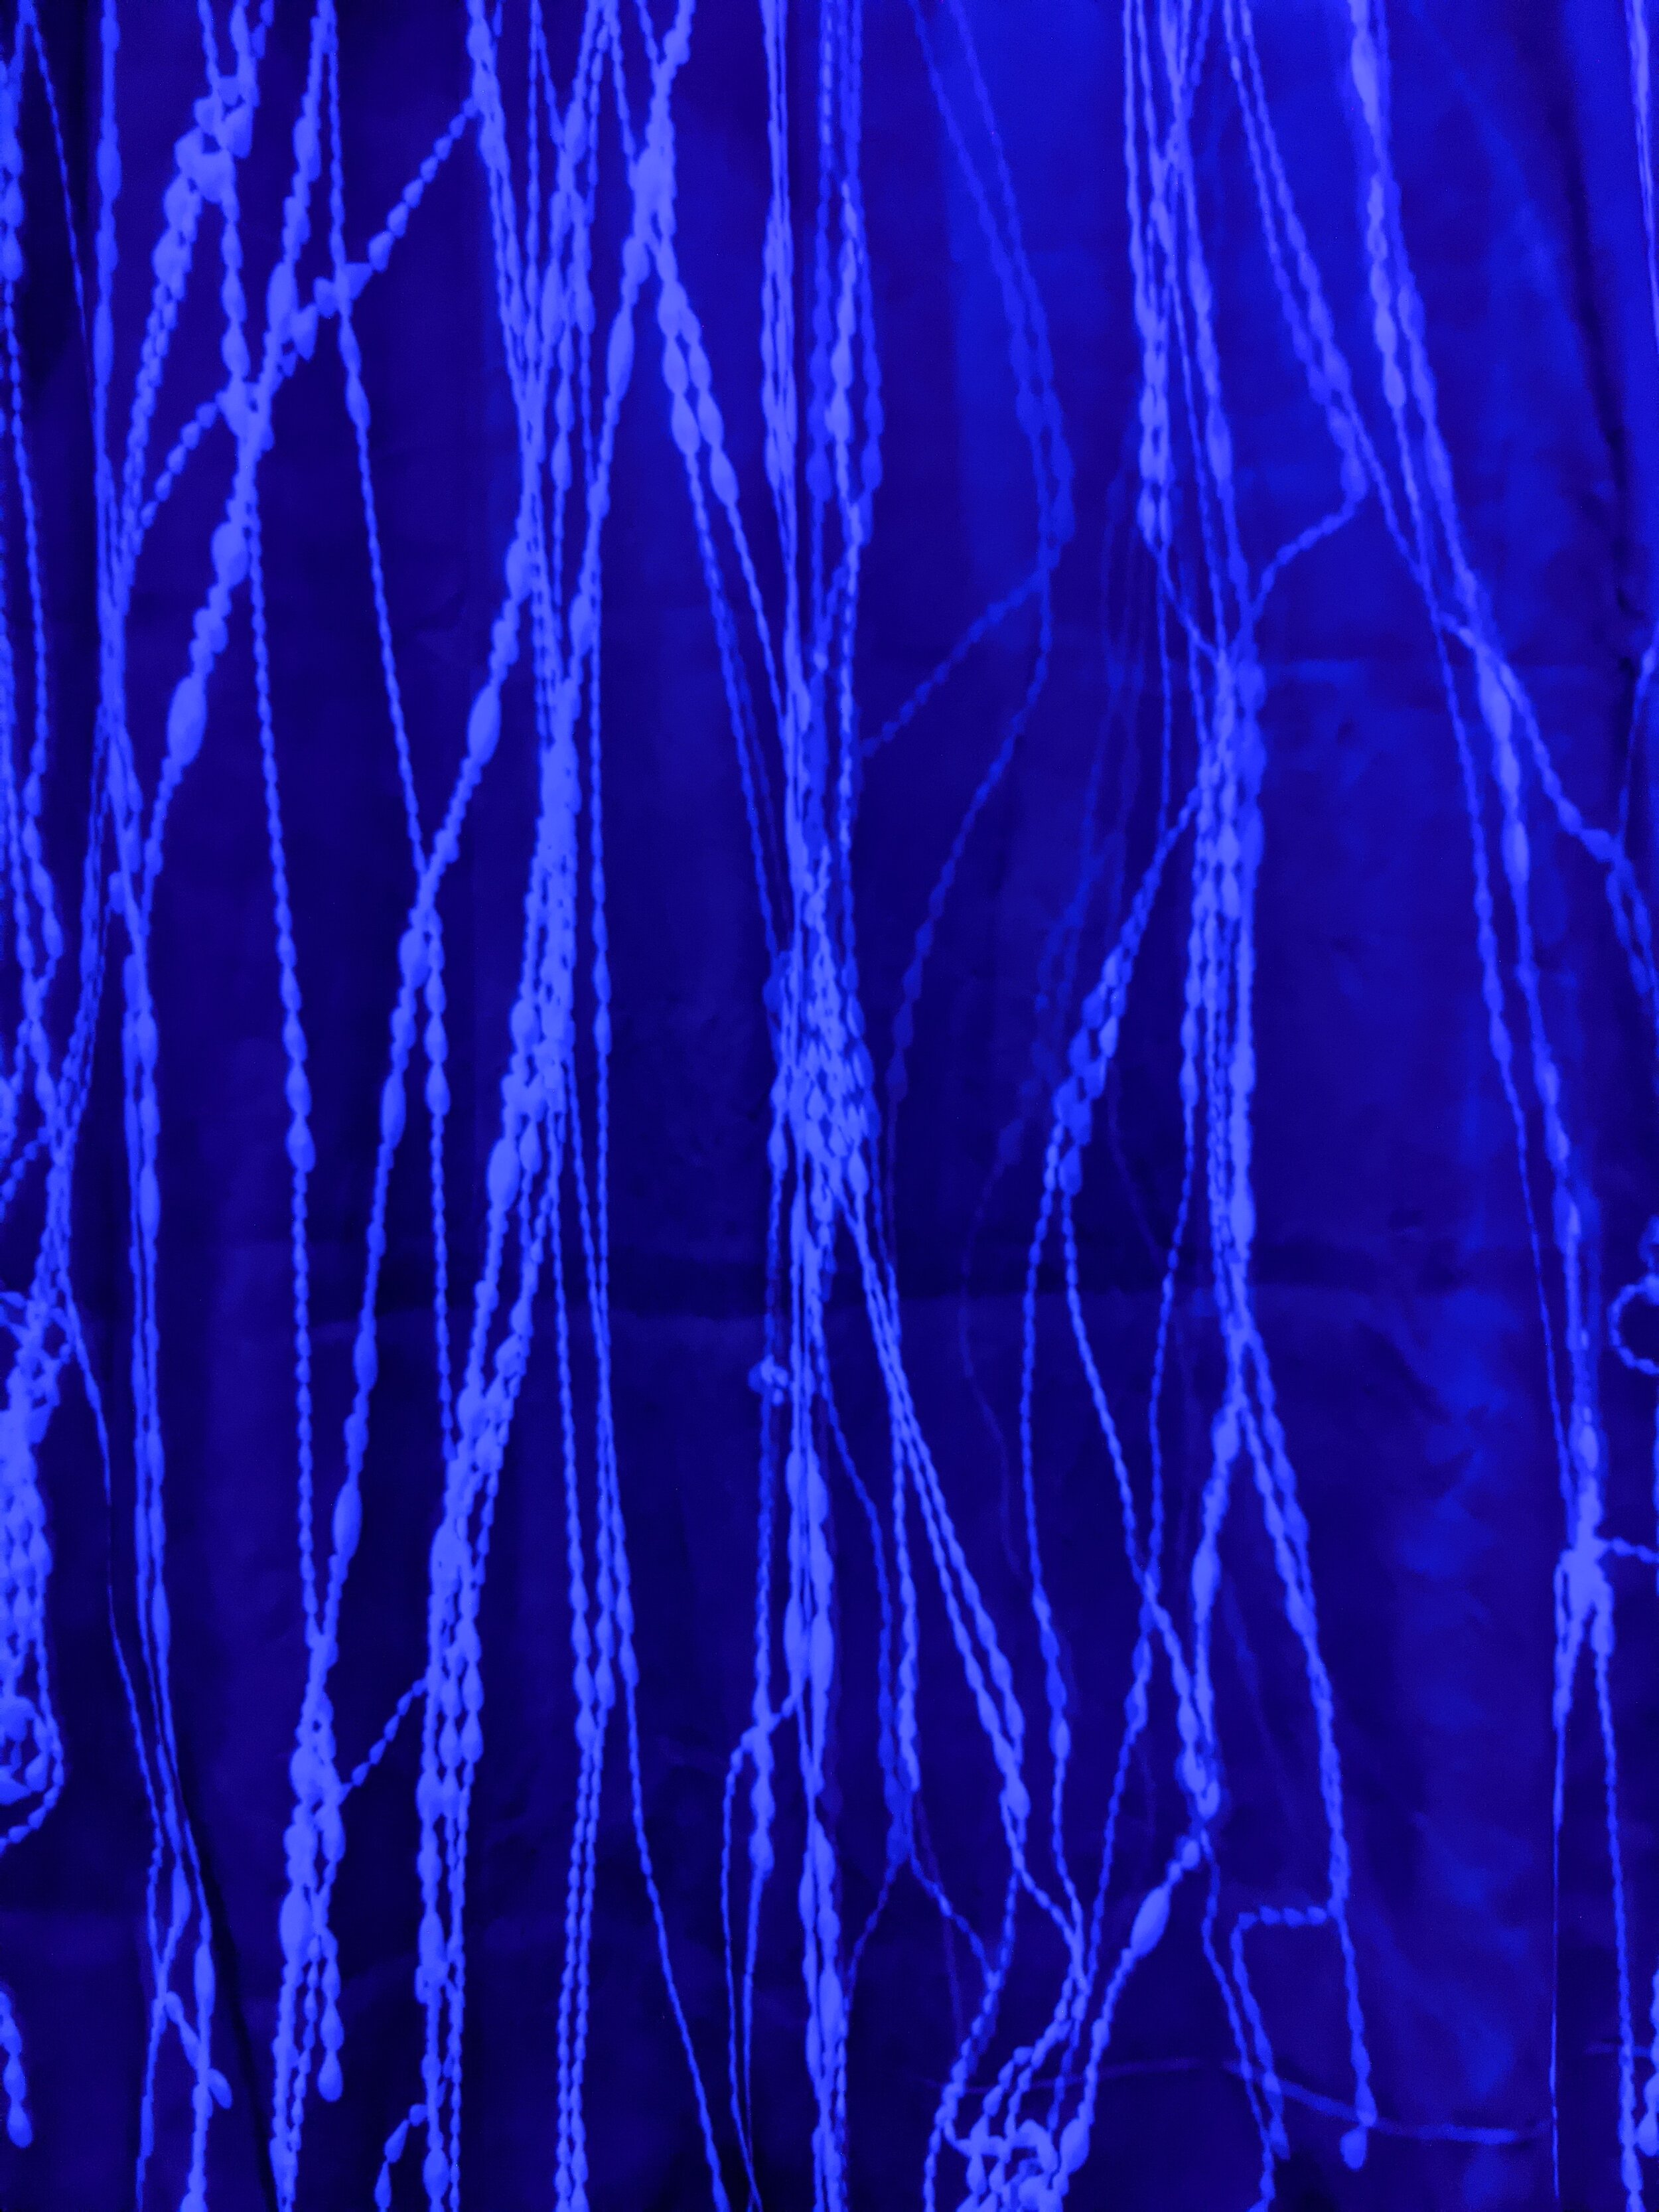  Cyanotype curtain detail 